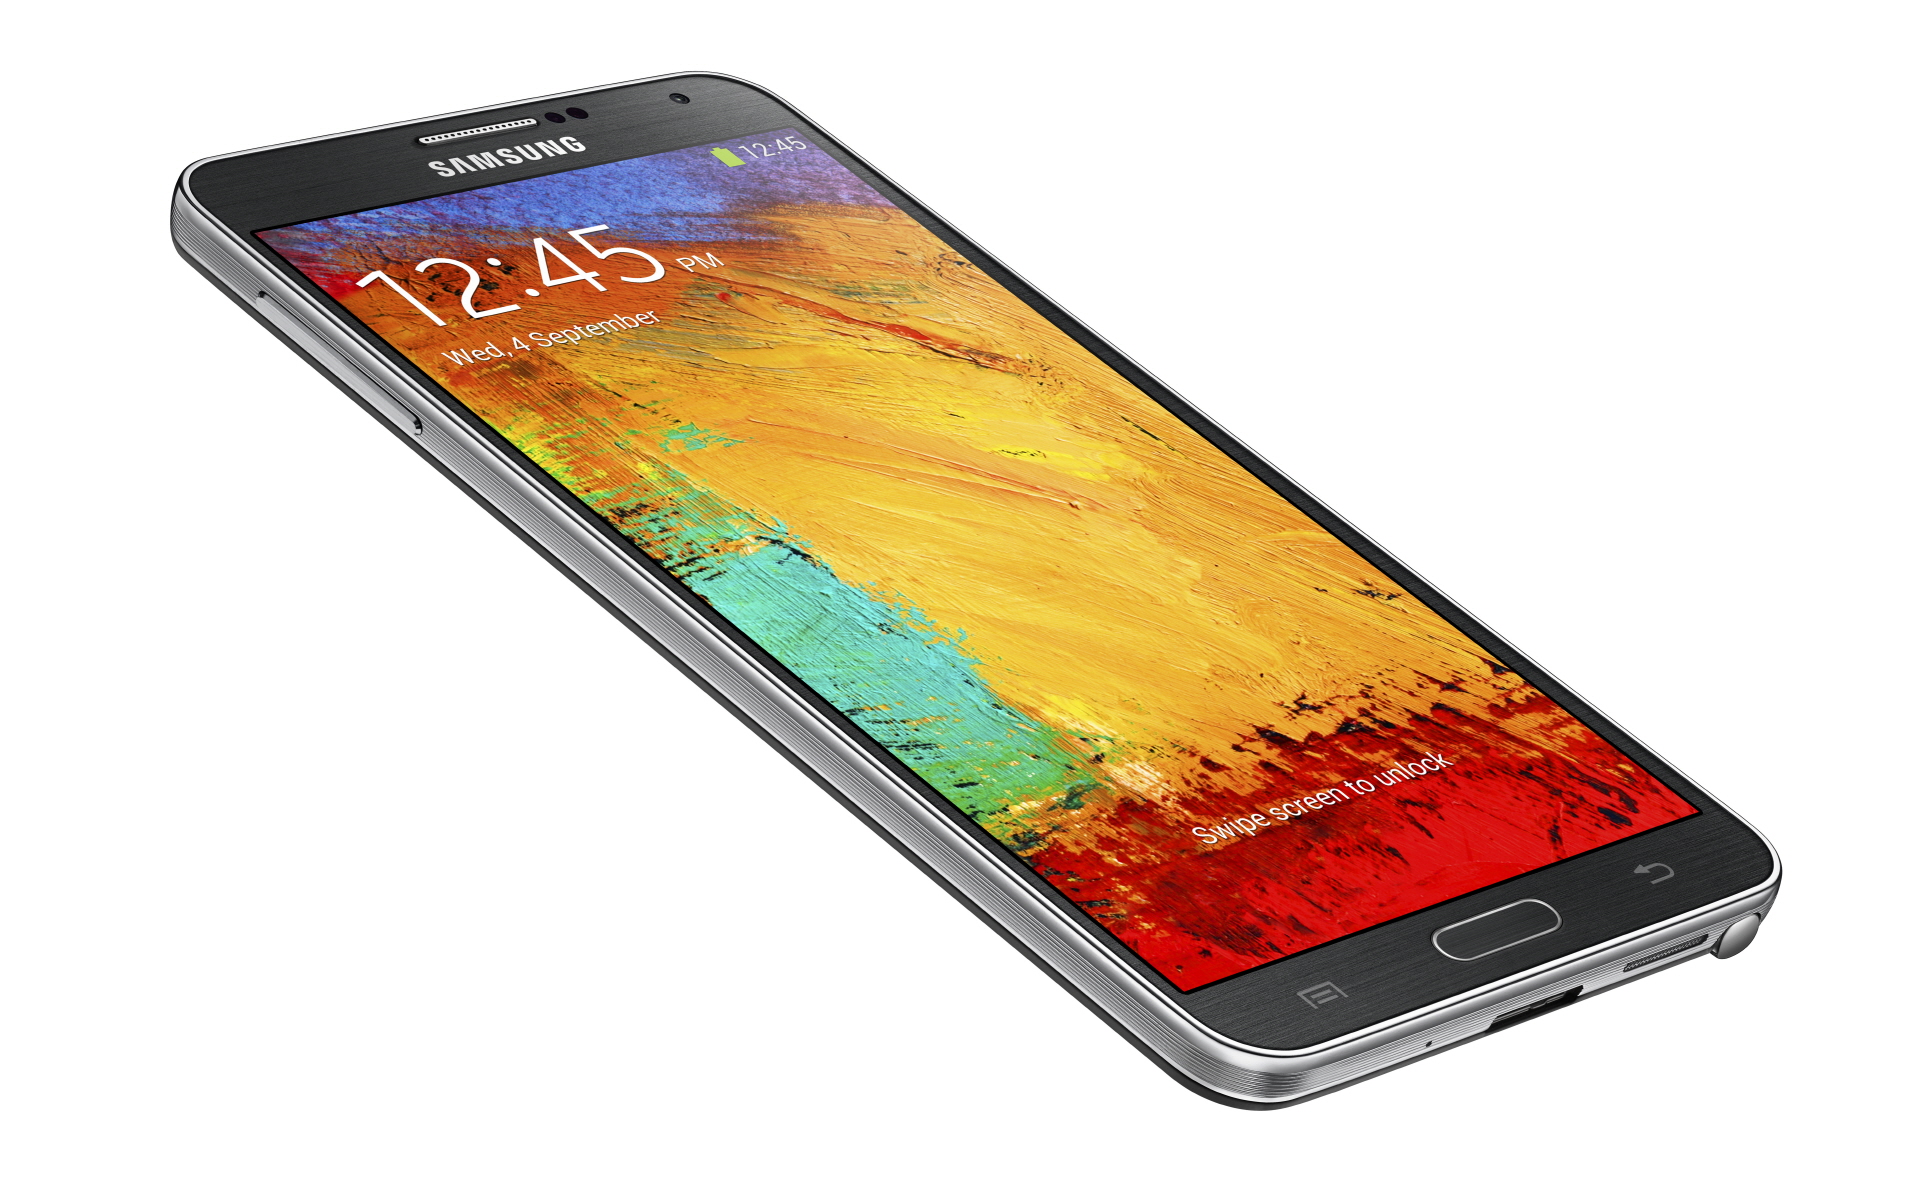 Harga Dan Spesifikasi Samsung Galaxy Note 3